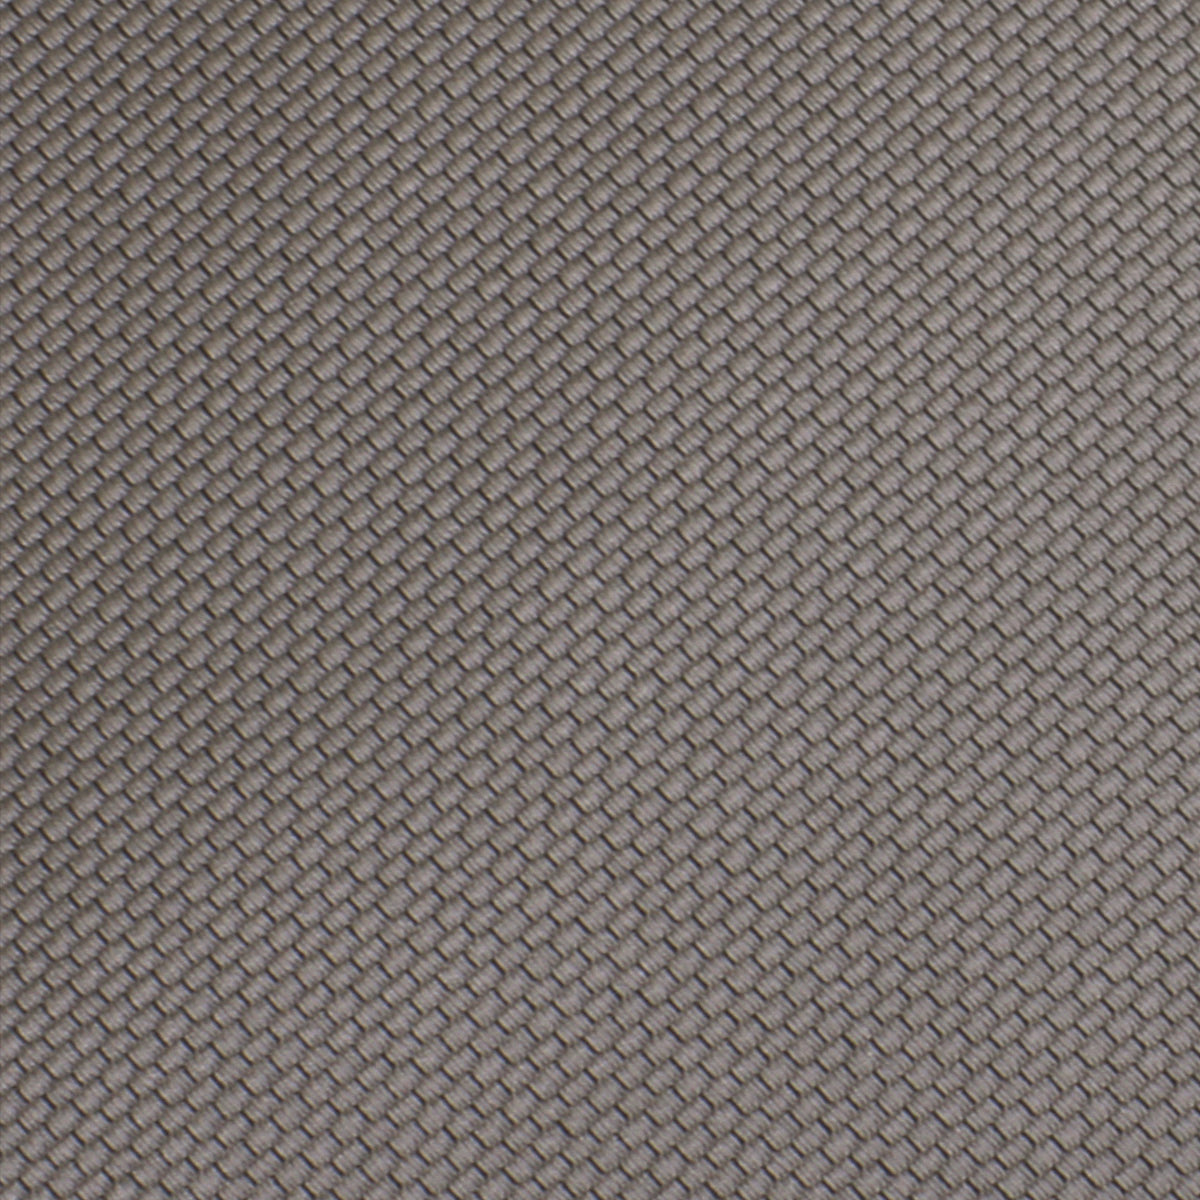 Portobello Beige Weave Fabric Swatch